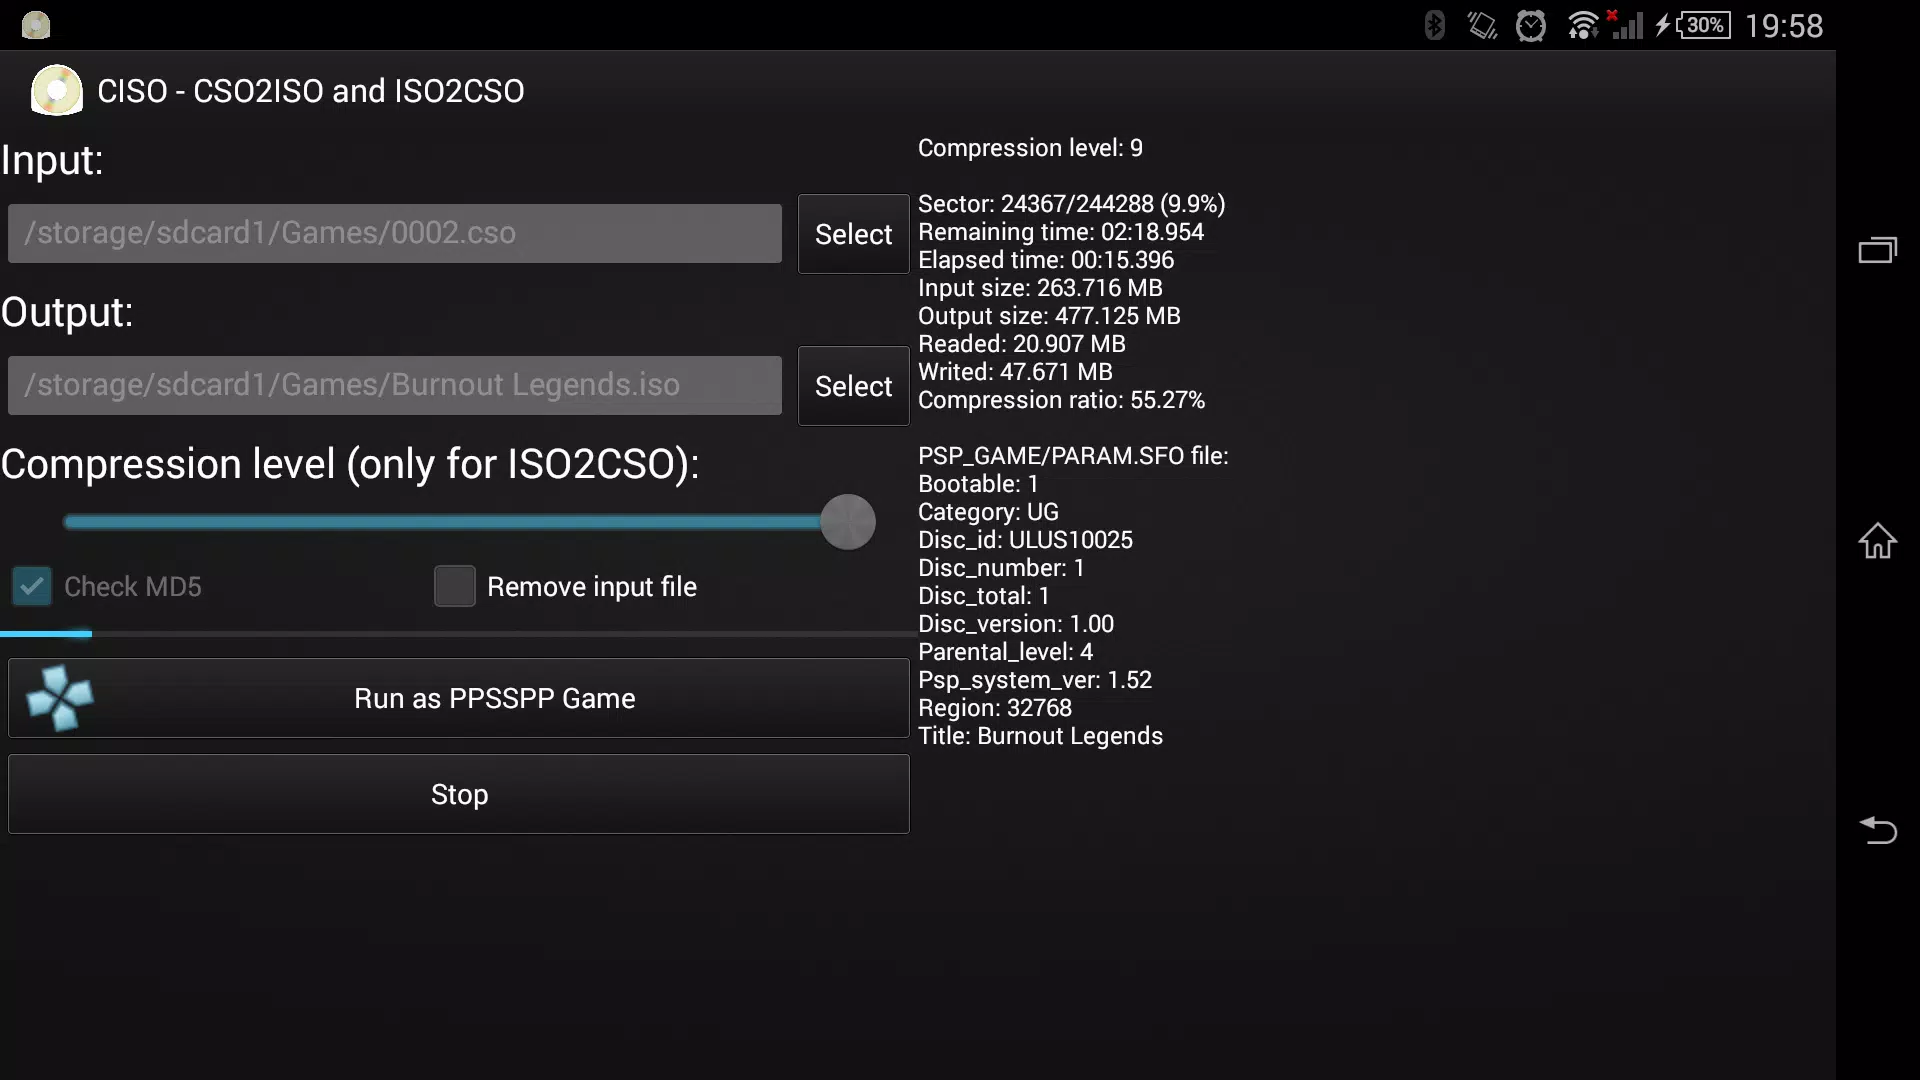 Download do APK de Baixador Jogos PSP - ISO/CSO para Android